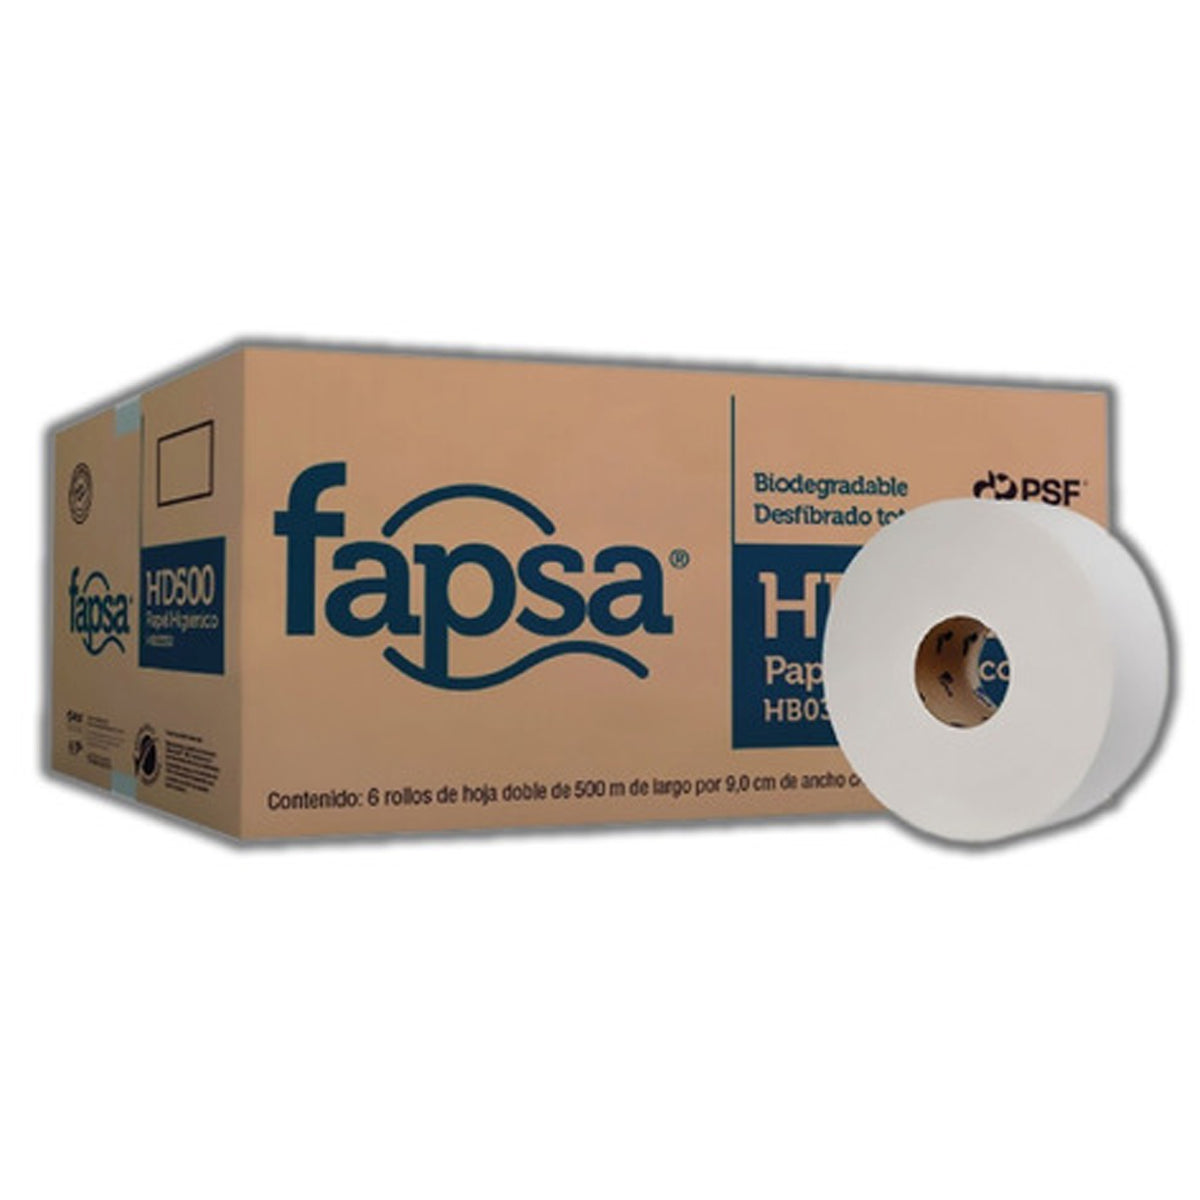 Papel Higiénico FAPSA HD500 c/6 en Bobina